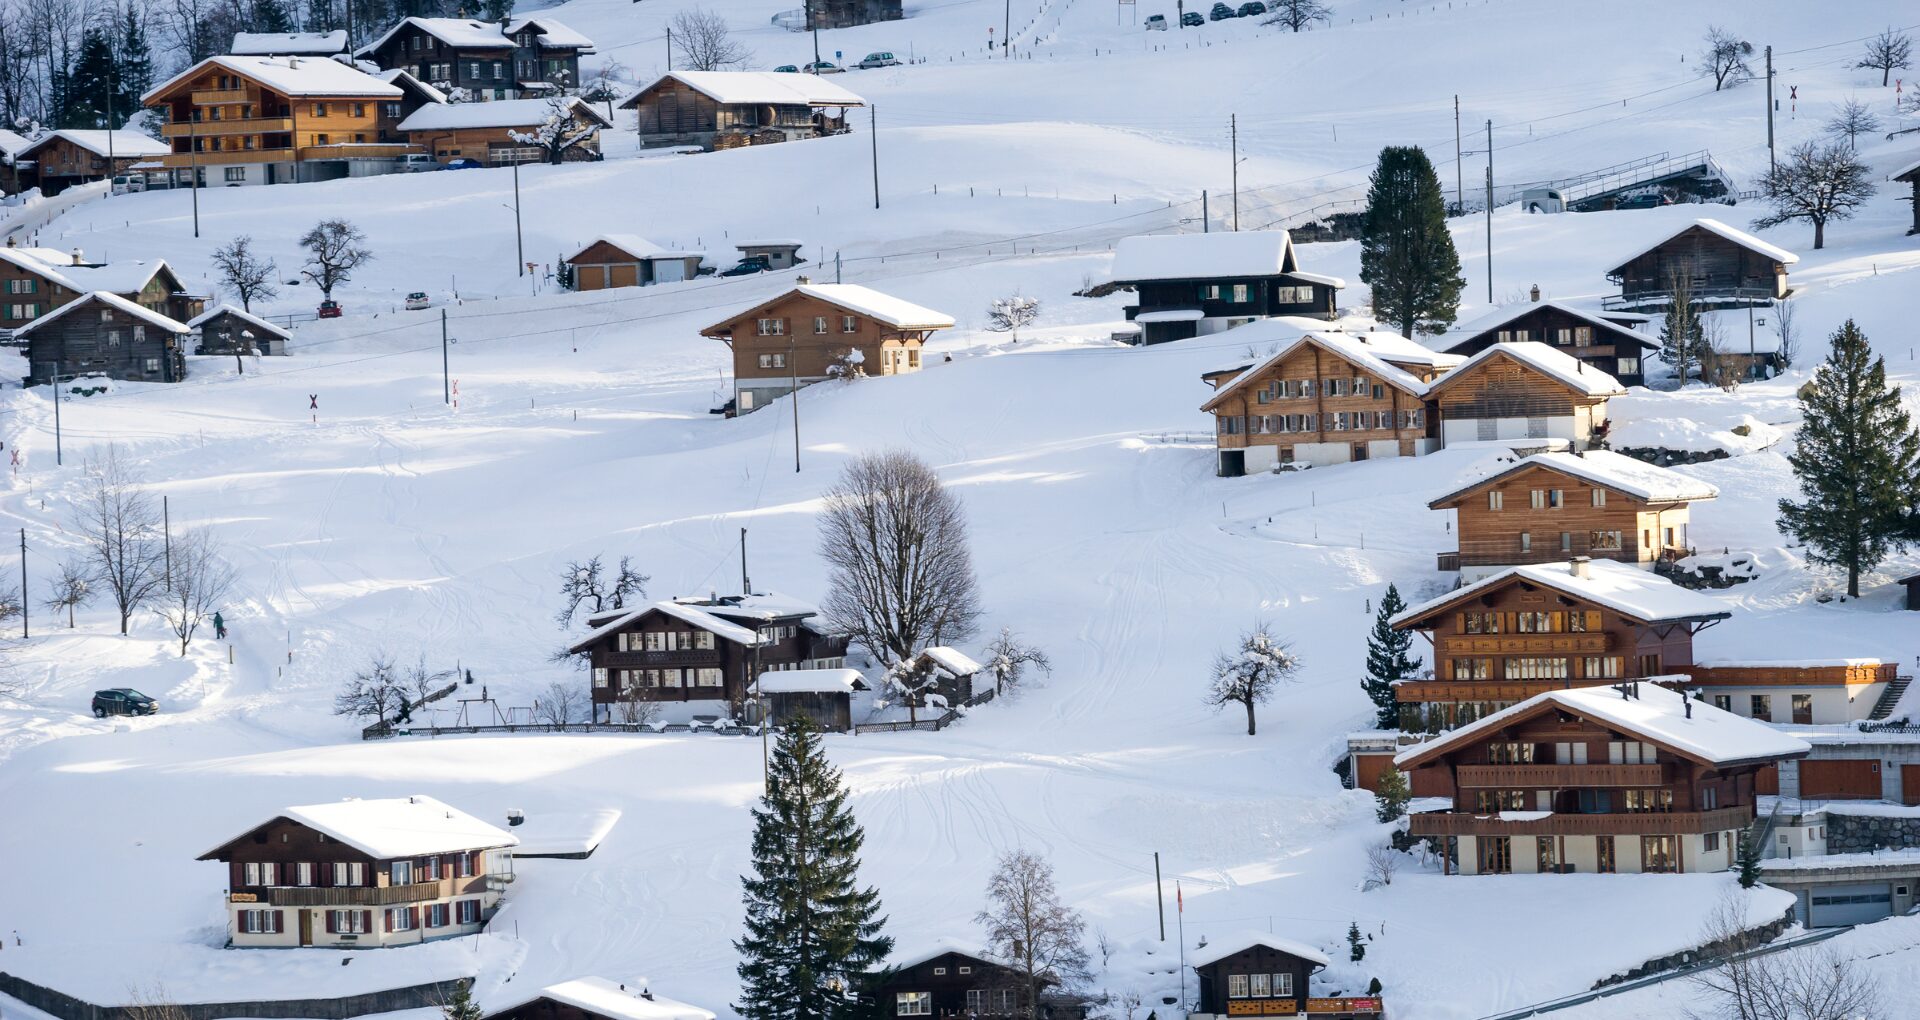 Snowy chalets in Switzerland